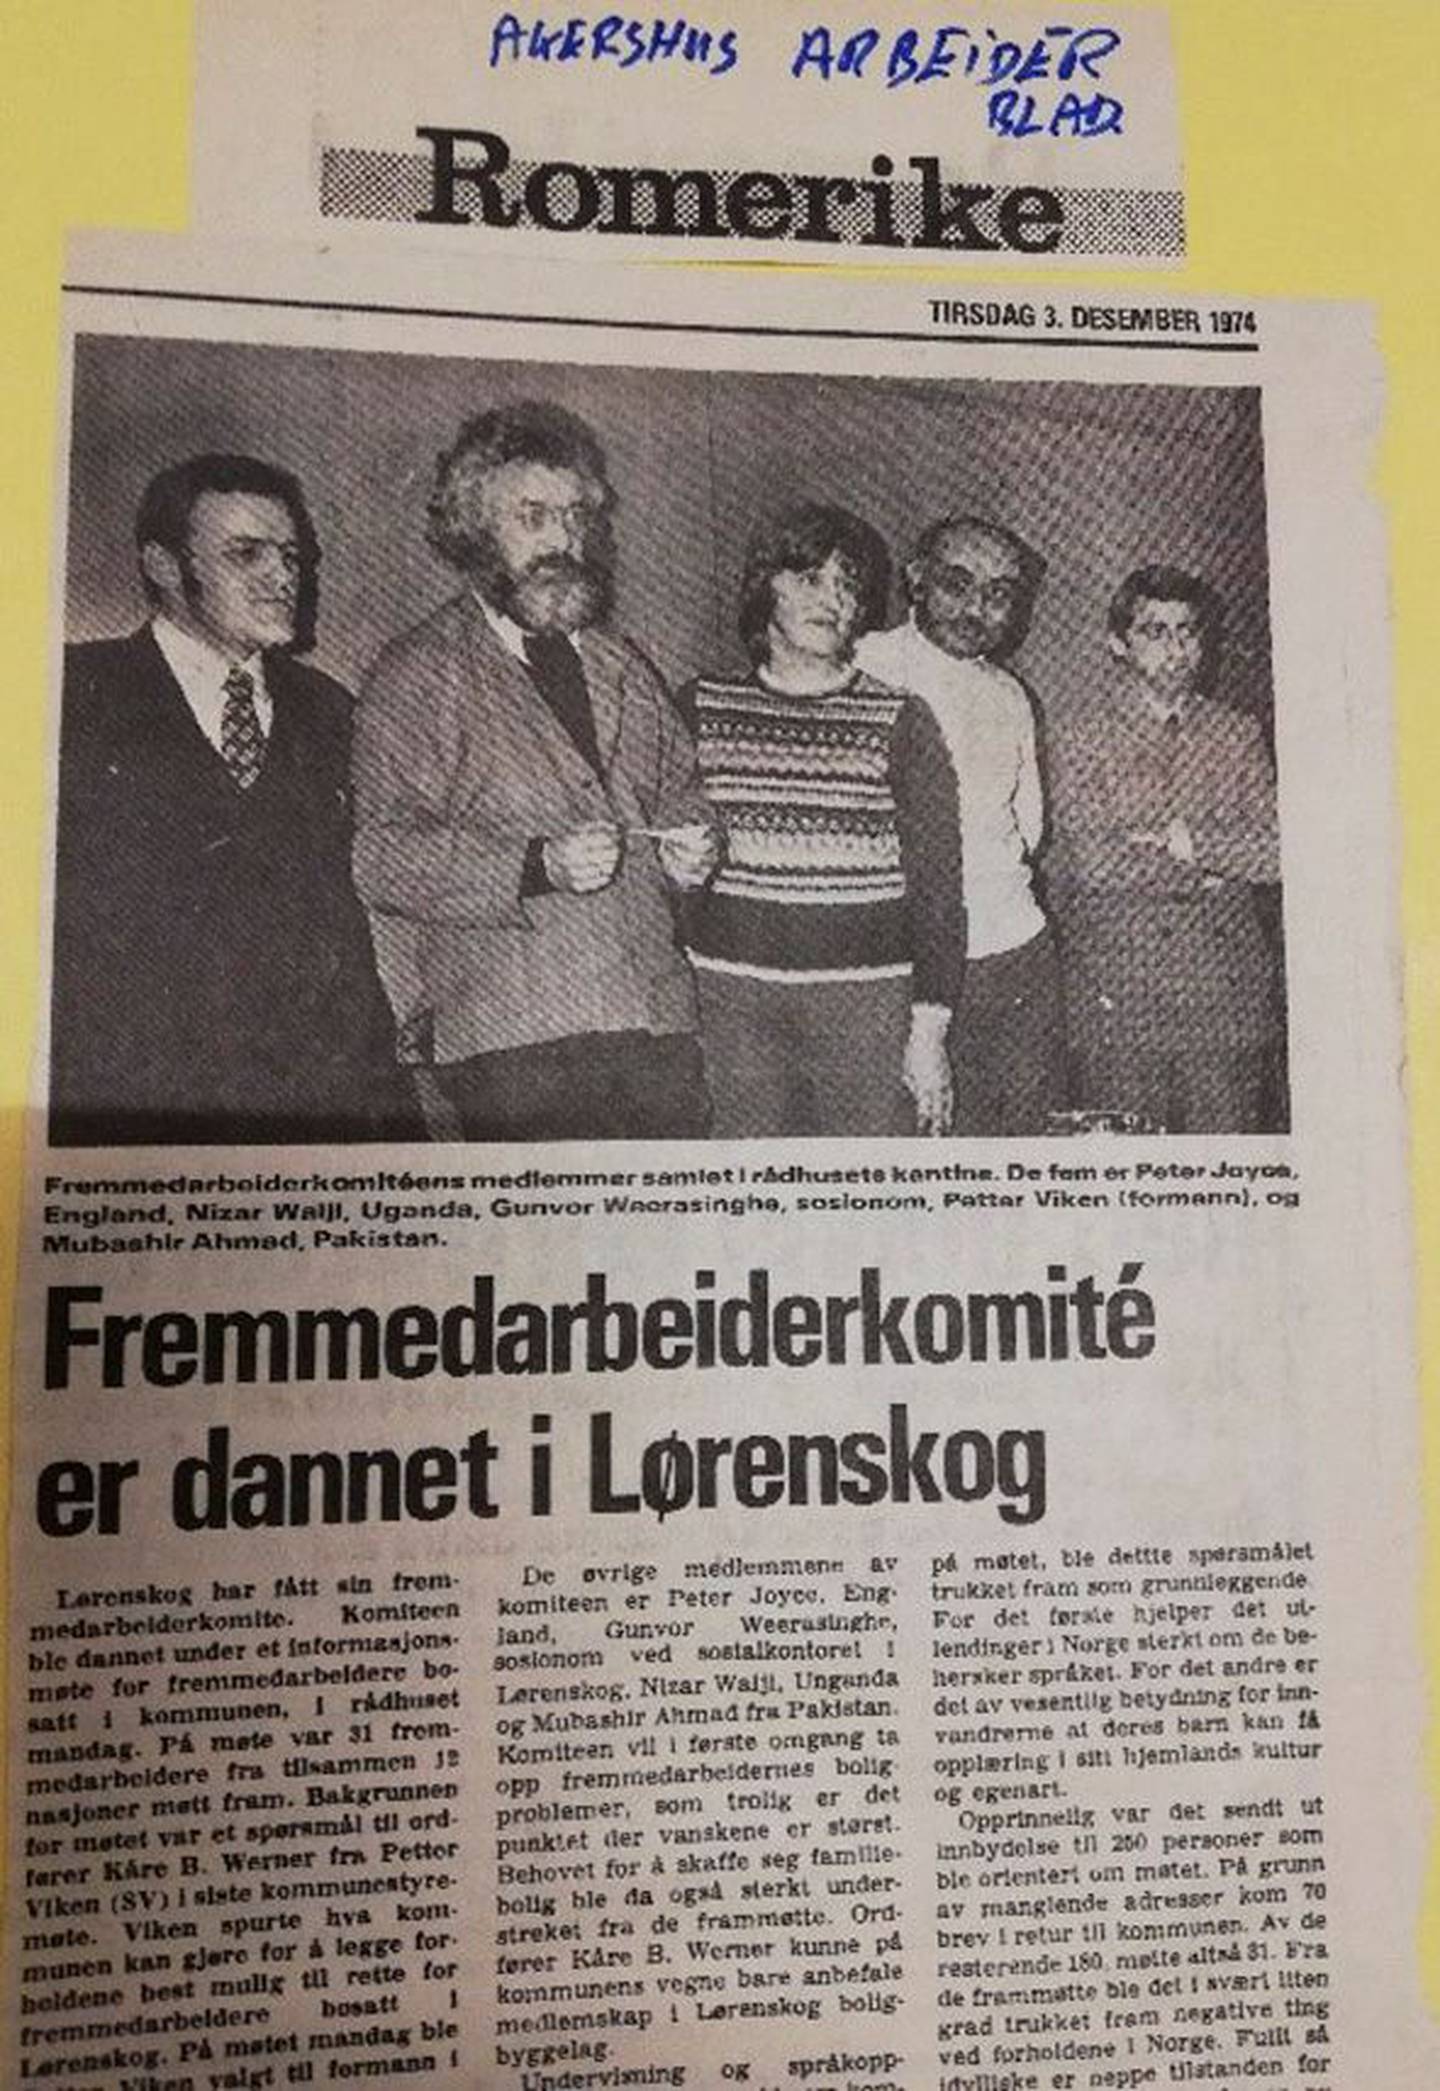 Da fremmedarbeiderkomiteen ble stiftet, kom Akershus Arbeiderblad. Ahmad Mubashir helt til høyre på bildet.

Akershus Arbeiderblad